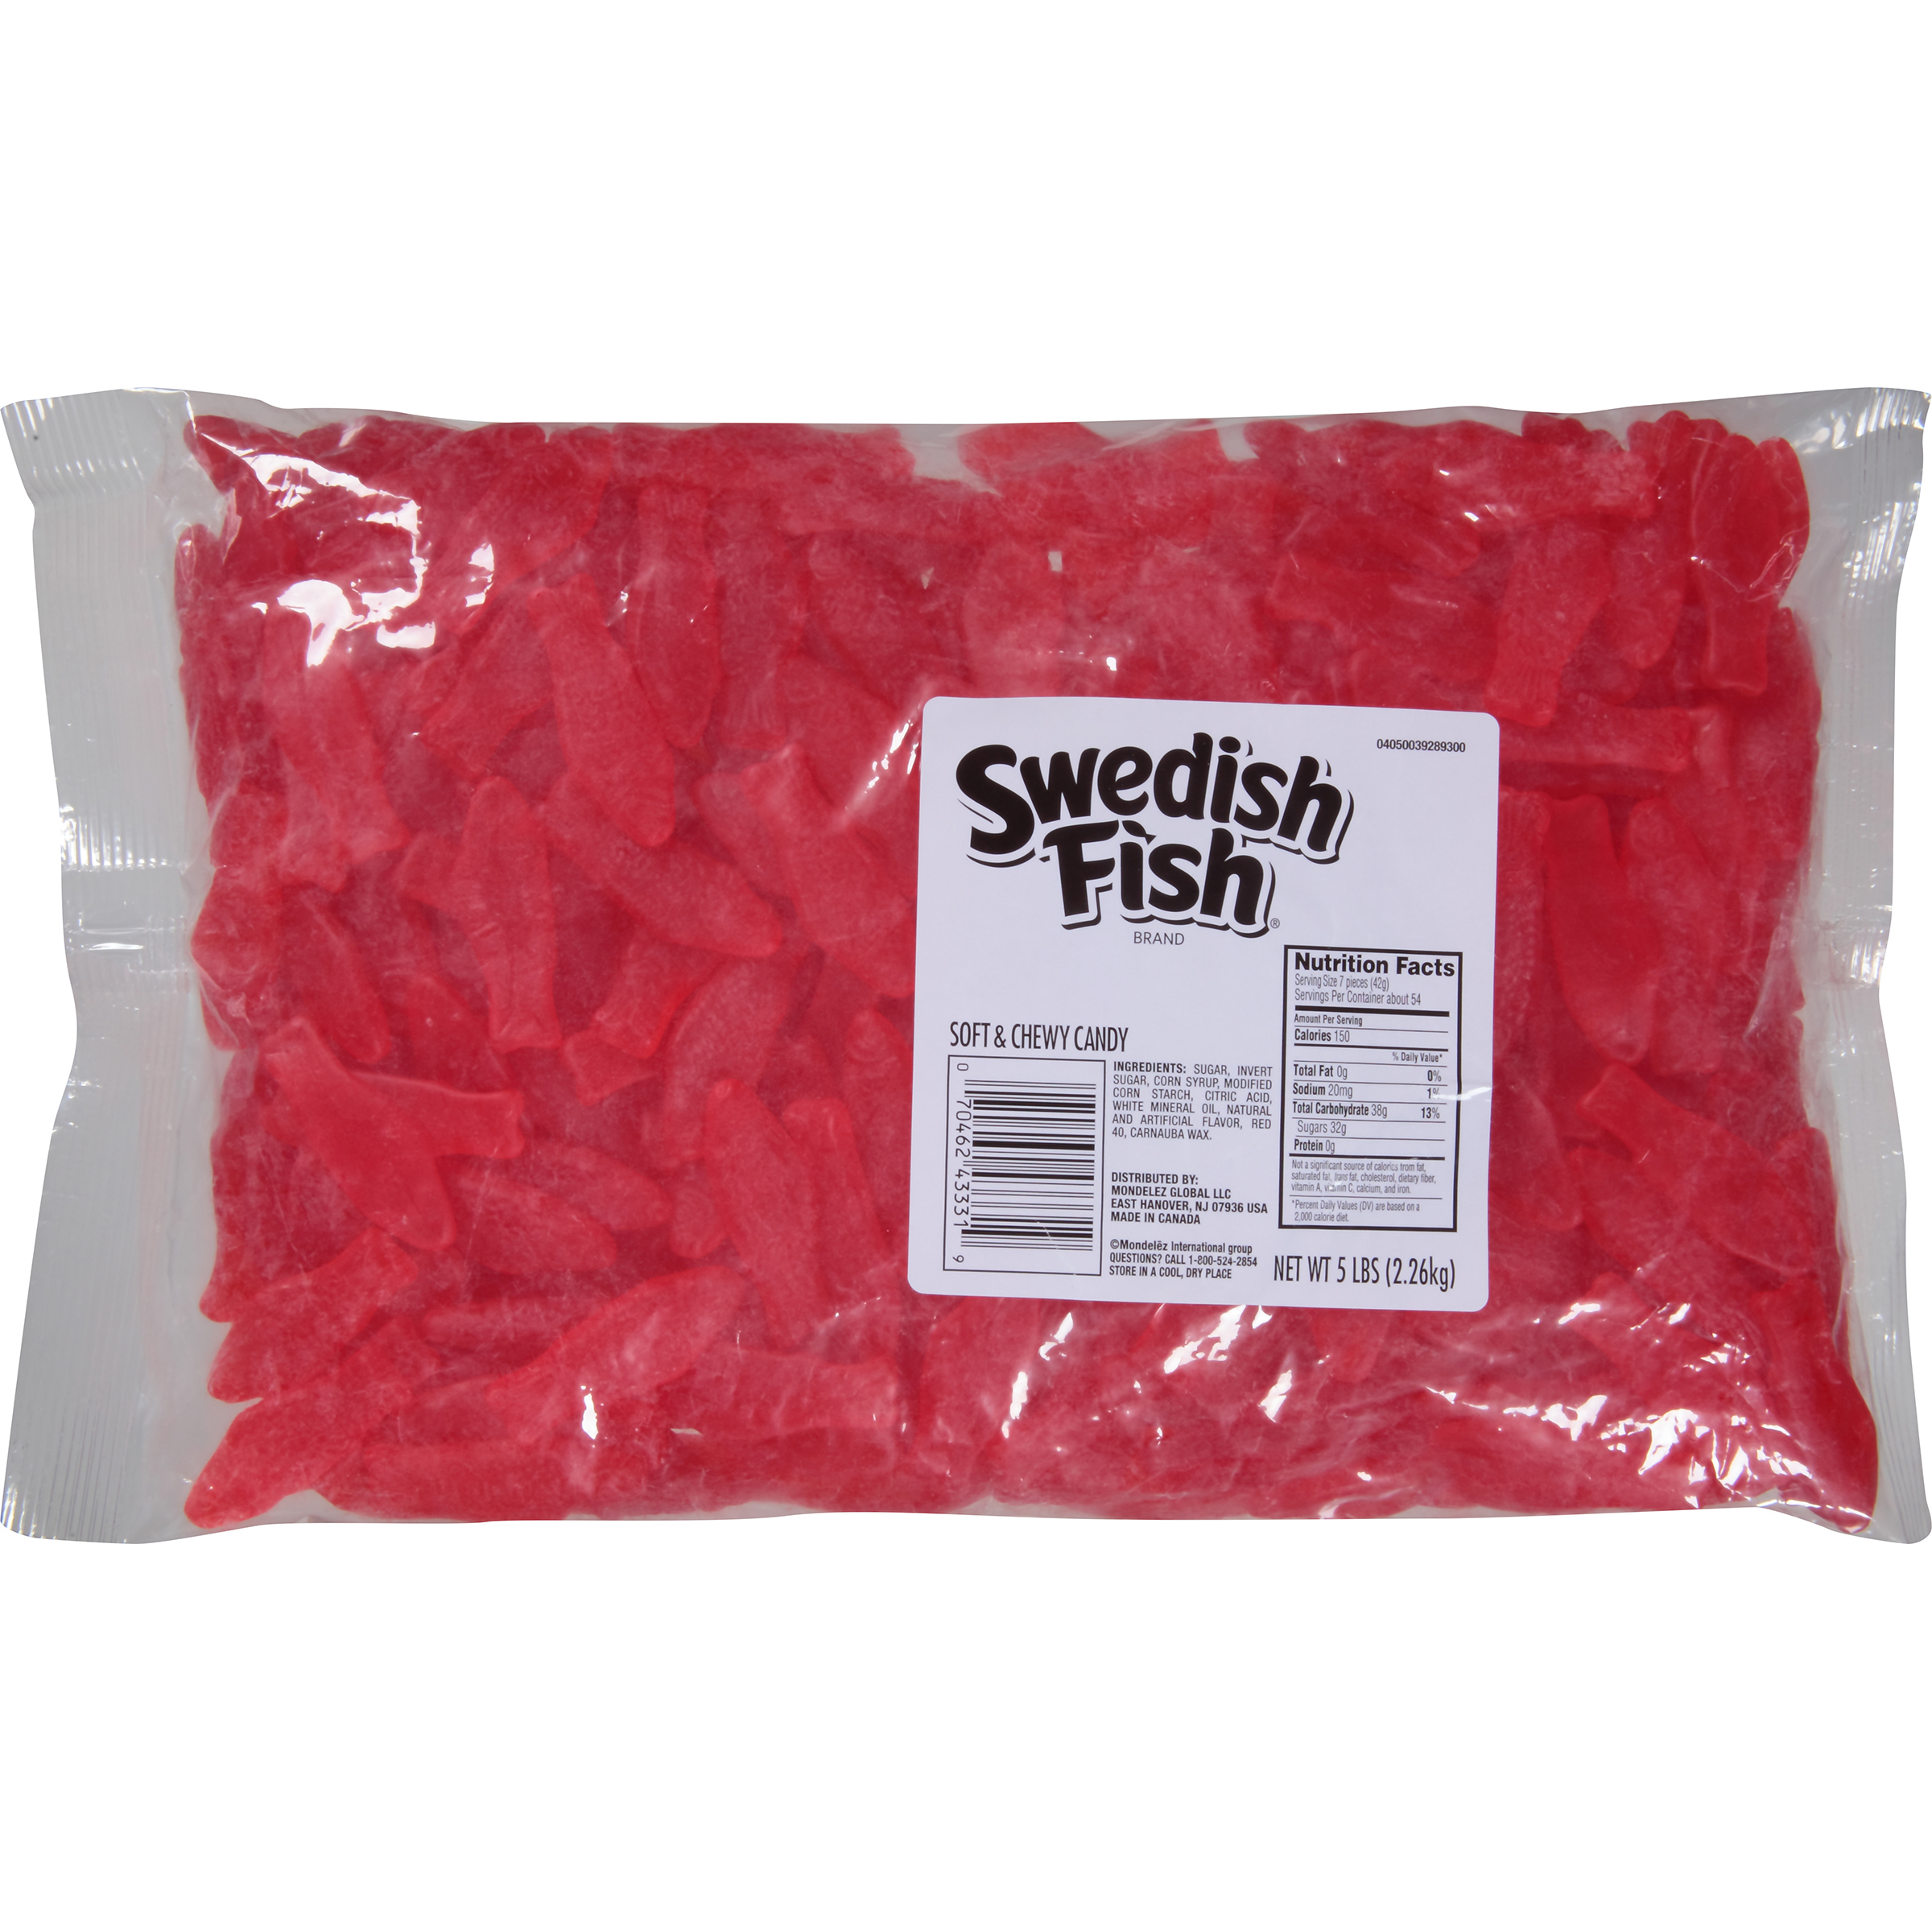 SWEDISH FISH Soft & Chewy Candy, 5 lb Bag-1